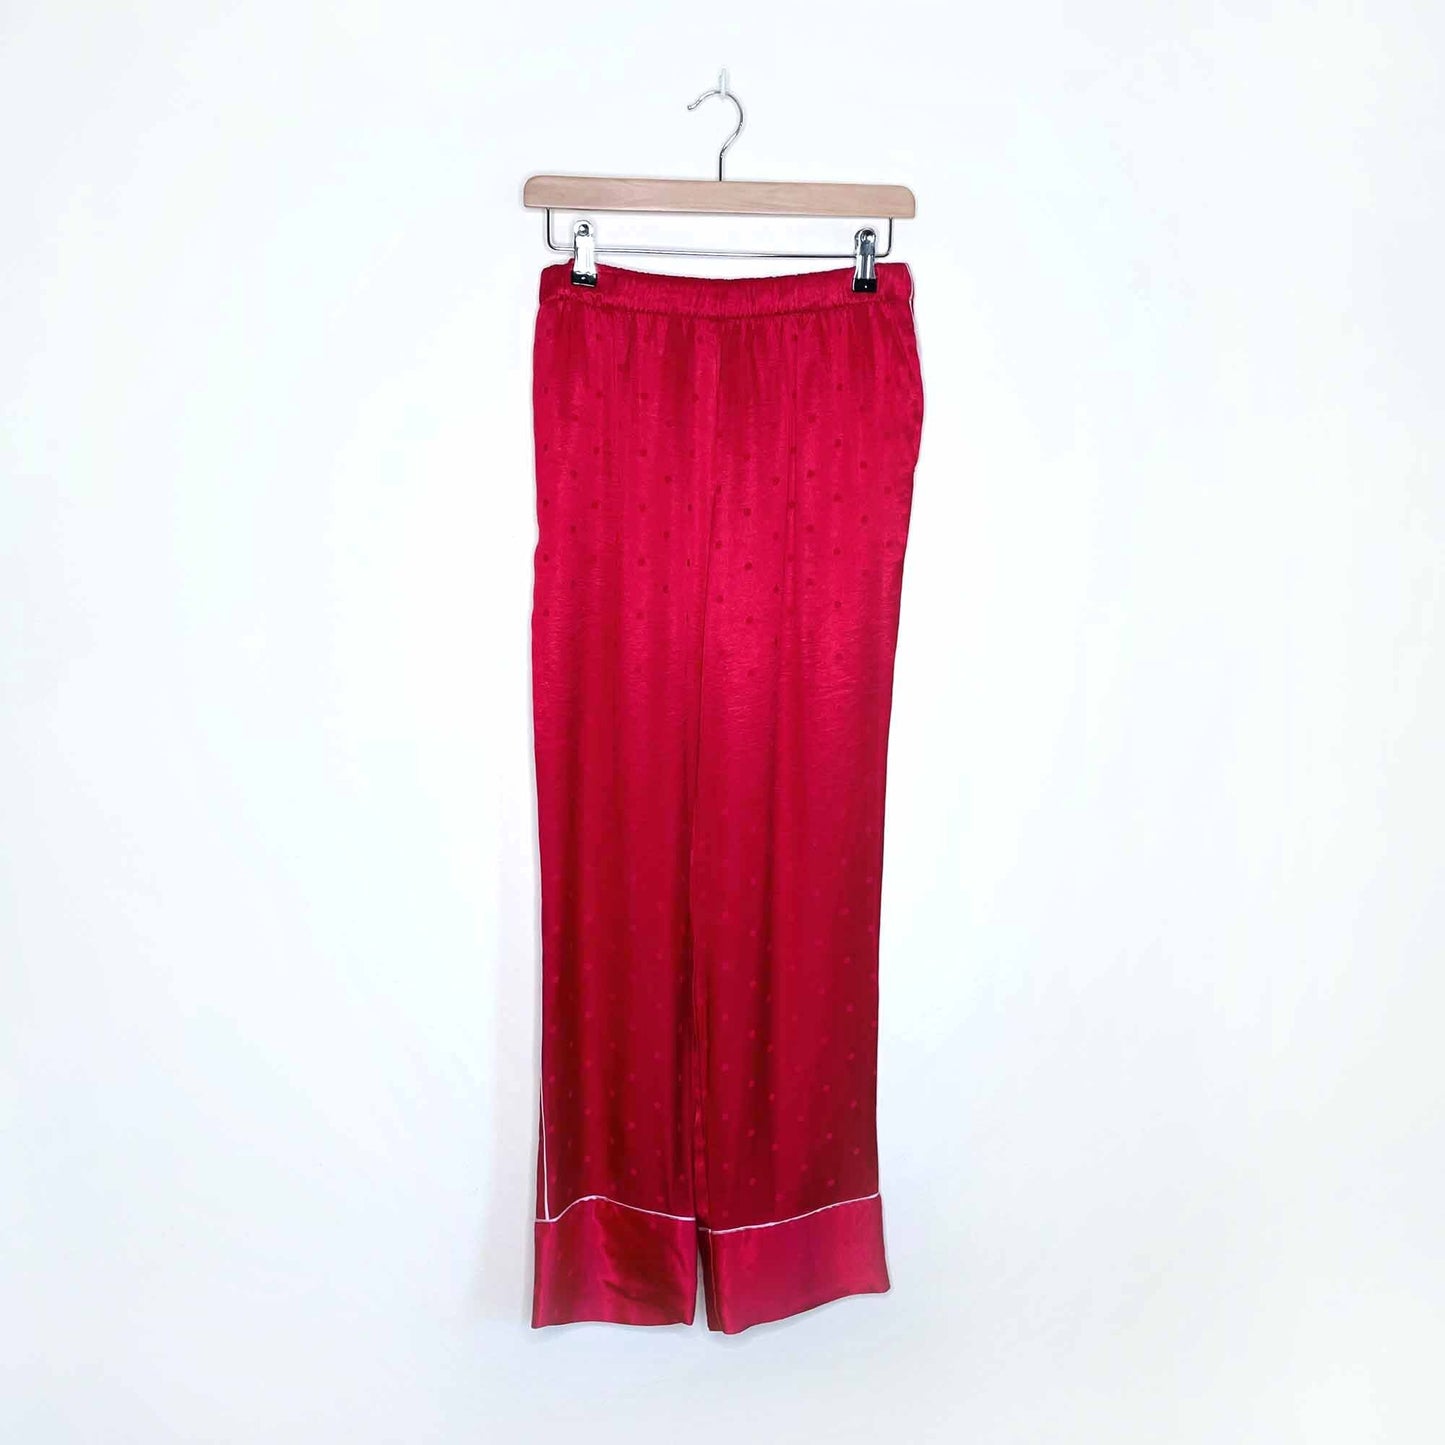 victoria's secret red satin polka dot pajama pants - size xs